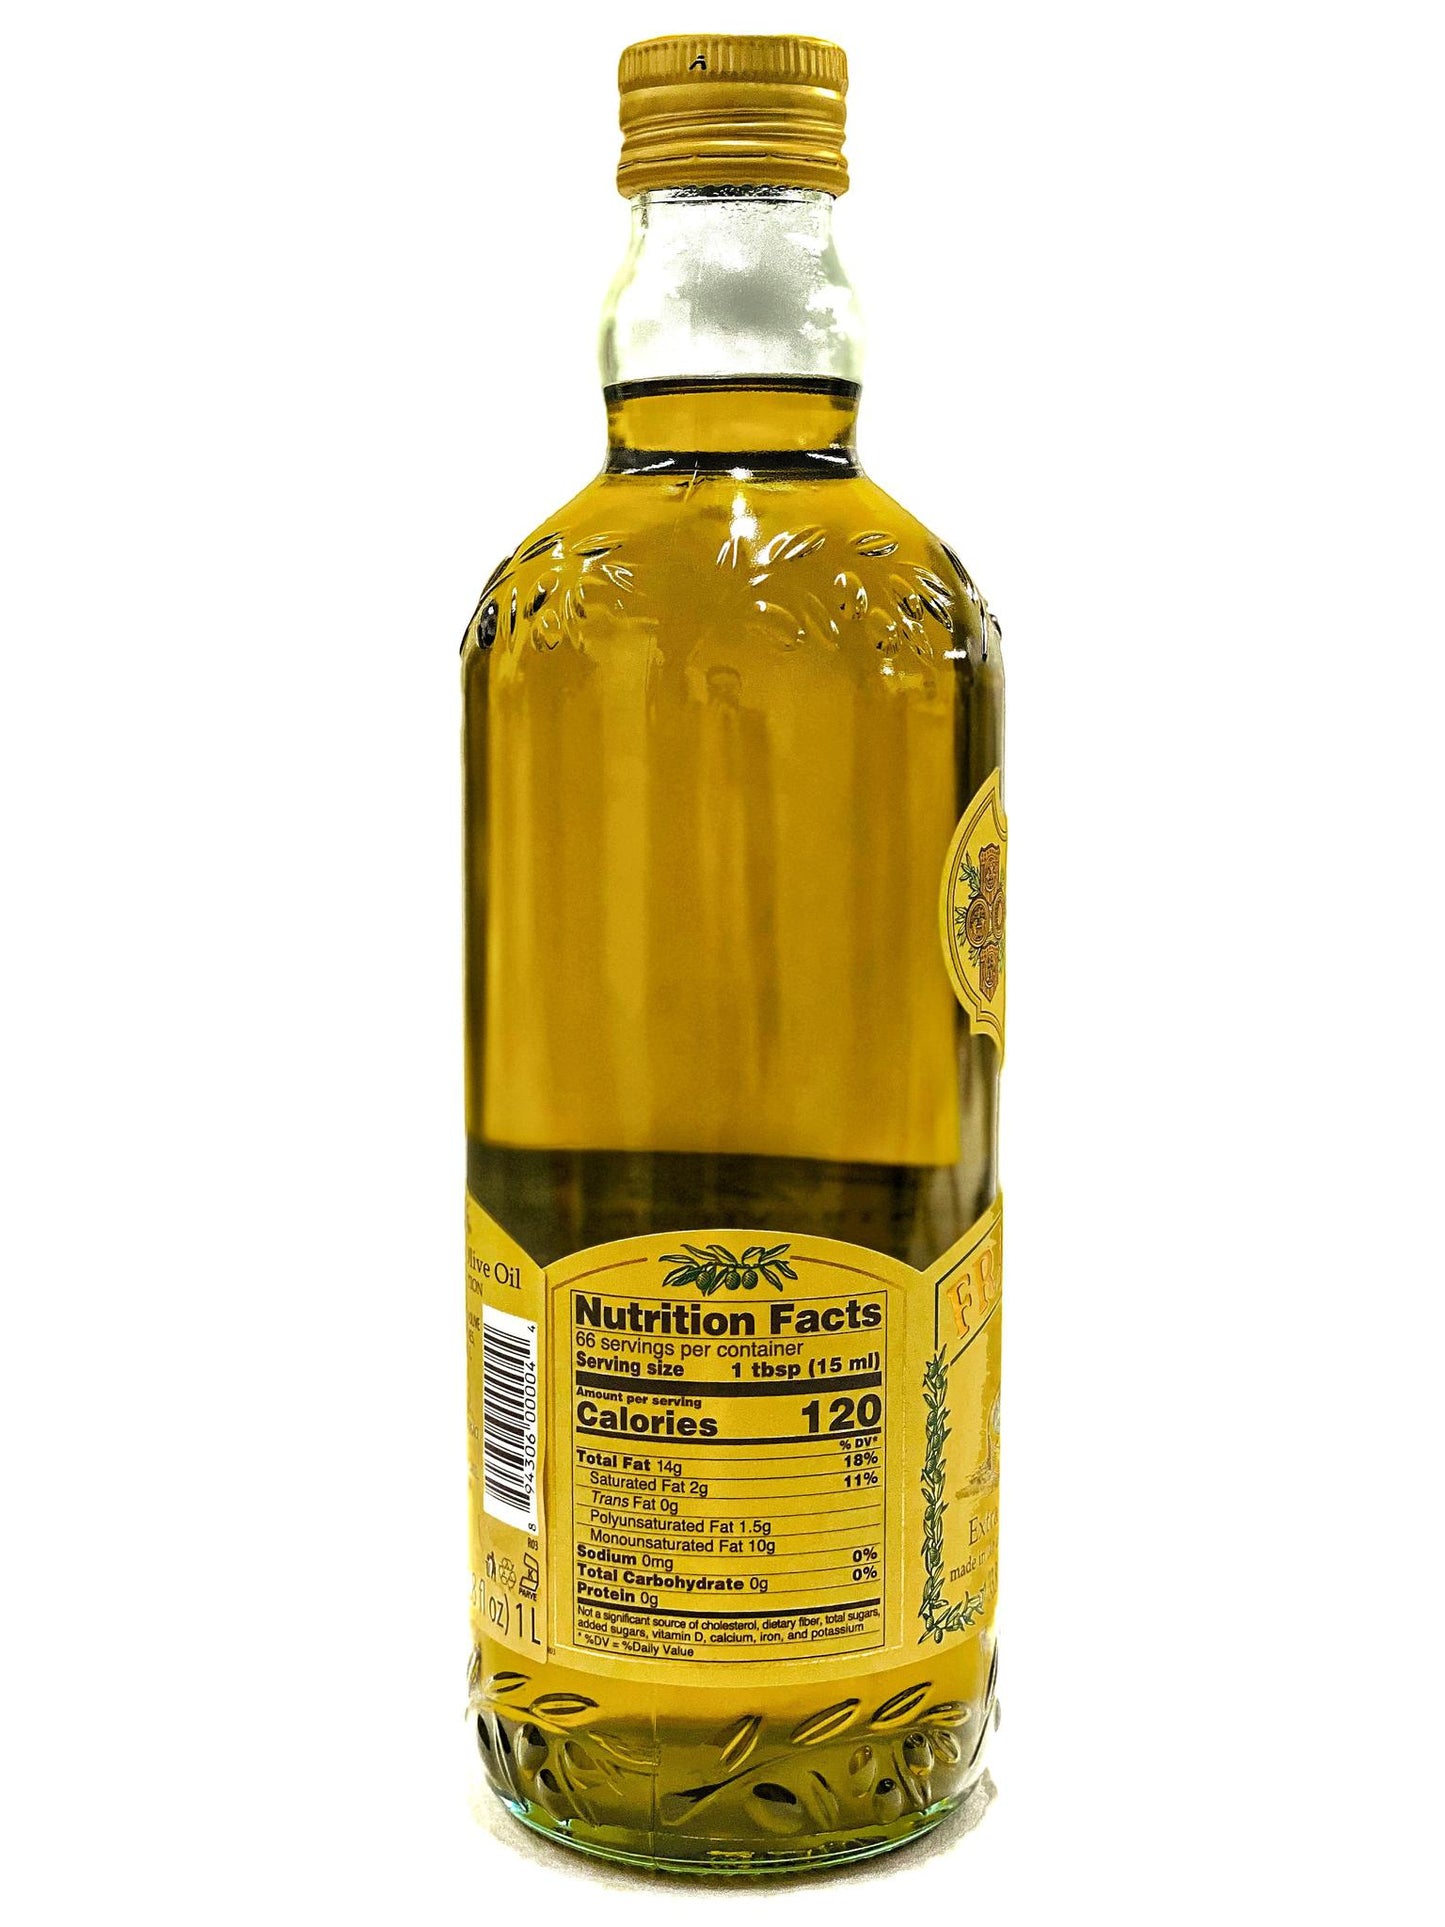  LIVS Olive Oil Extra Virgin - Extra Virgin Olive Oil